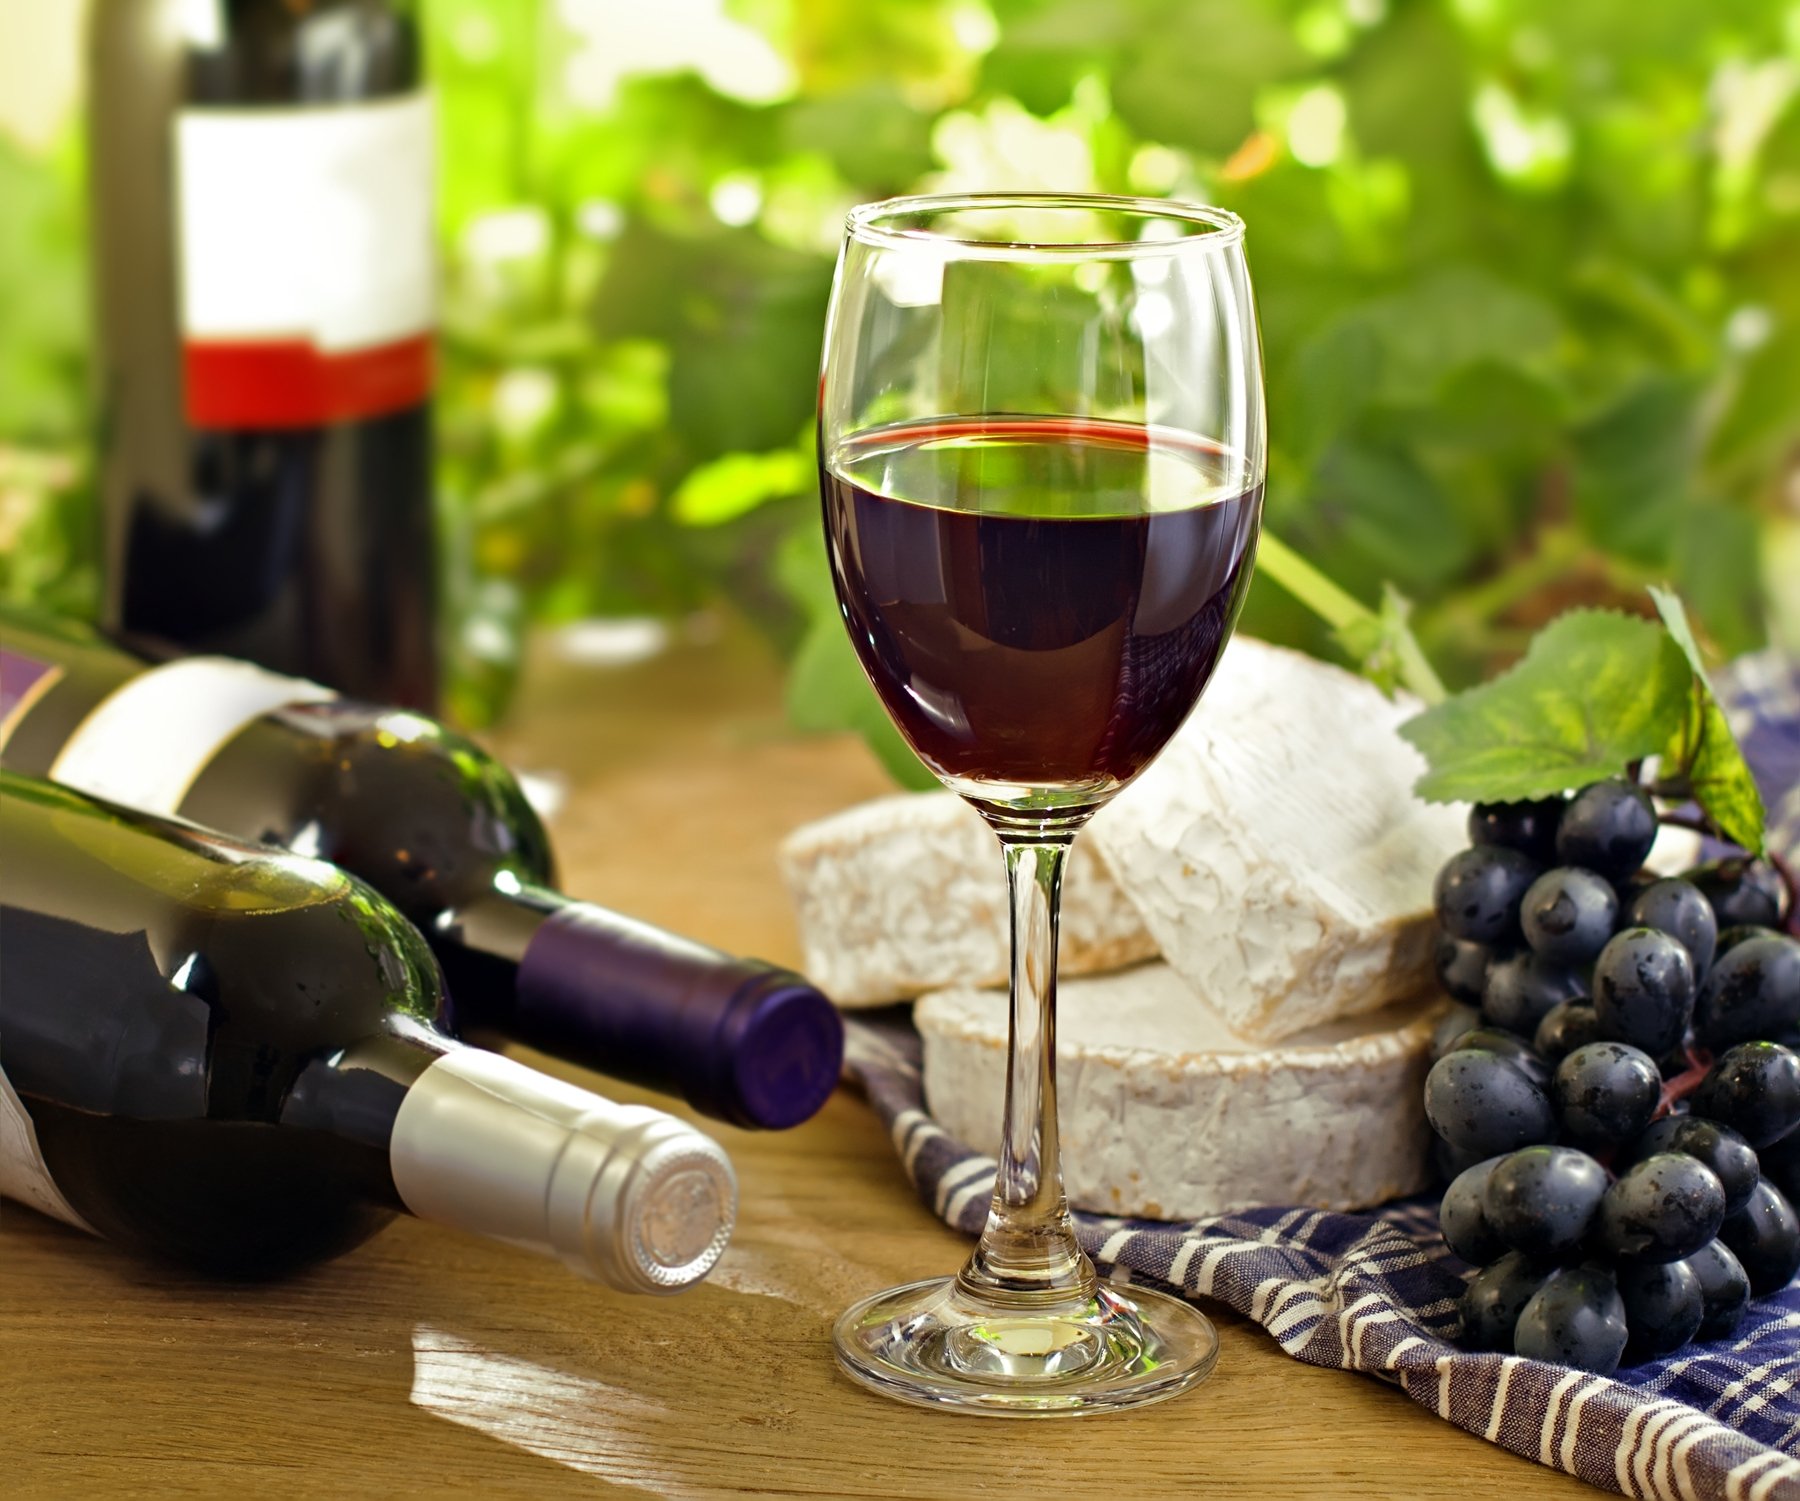 Картинку вине. Испанец винодел. Красное вино. Выно. Виноградное вино.